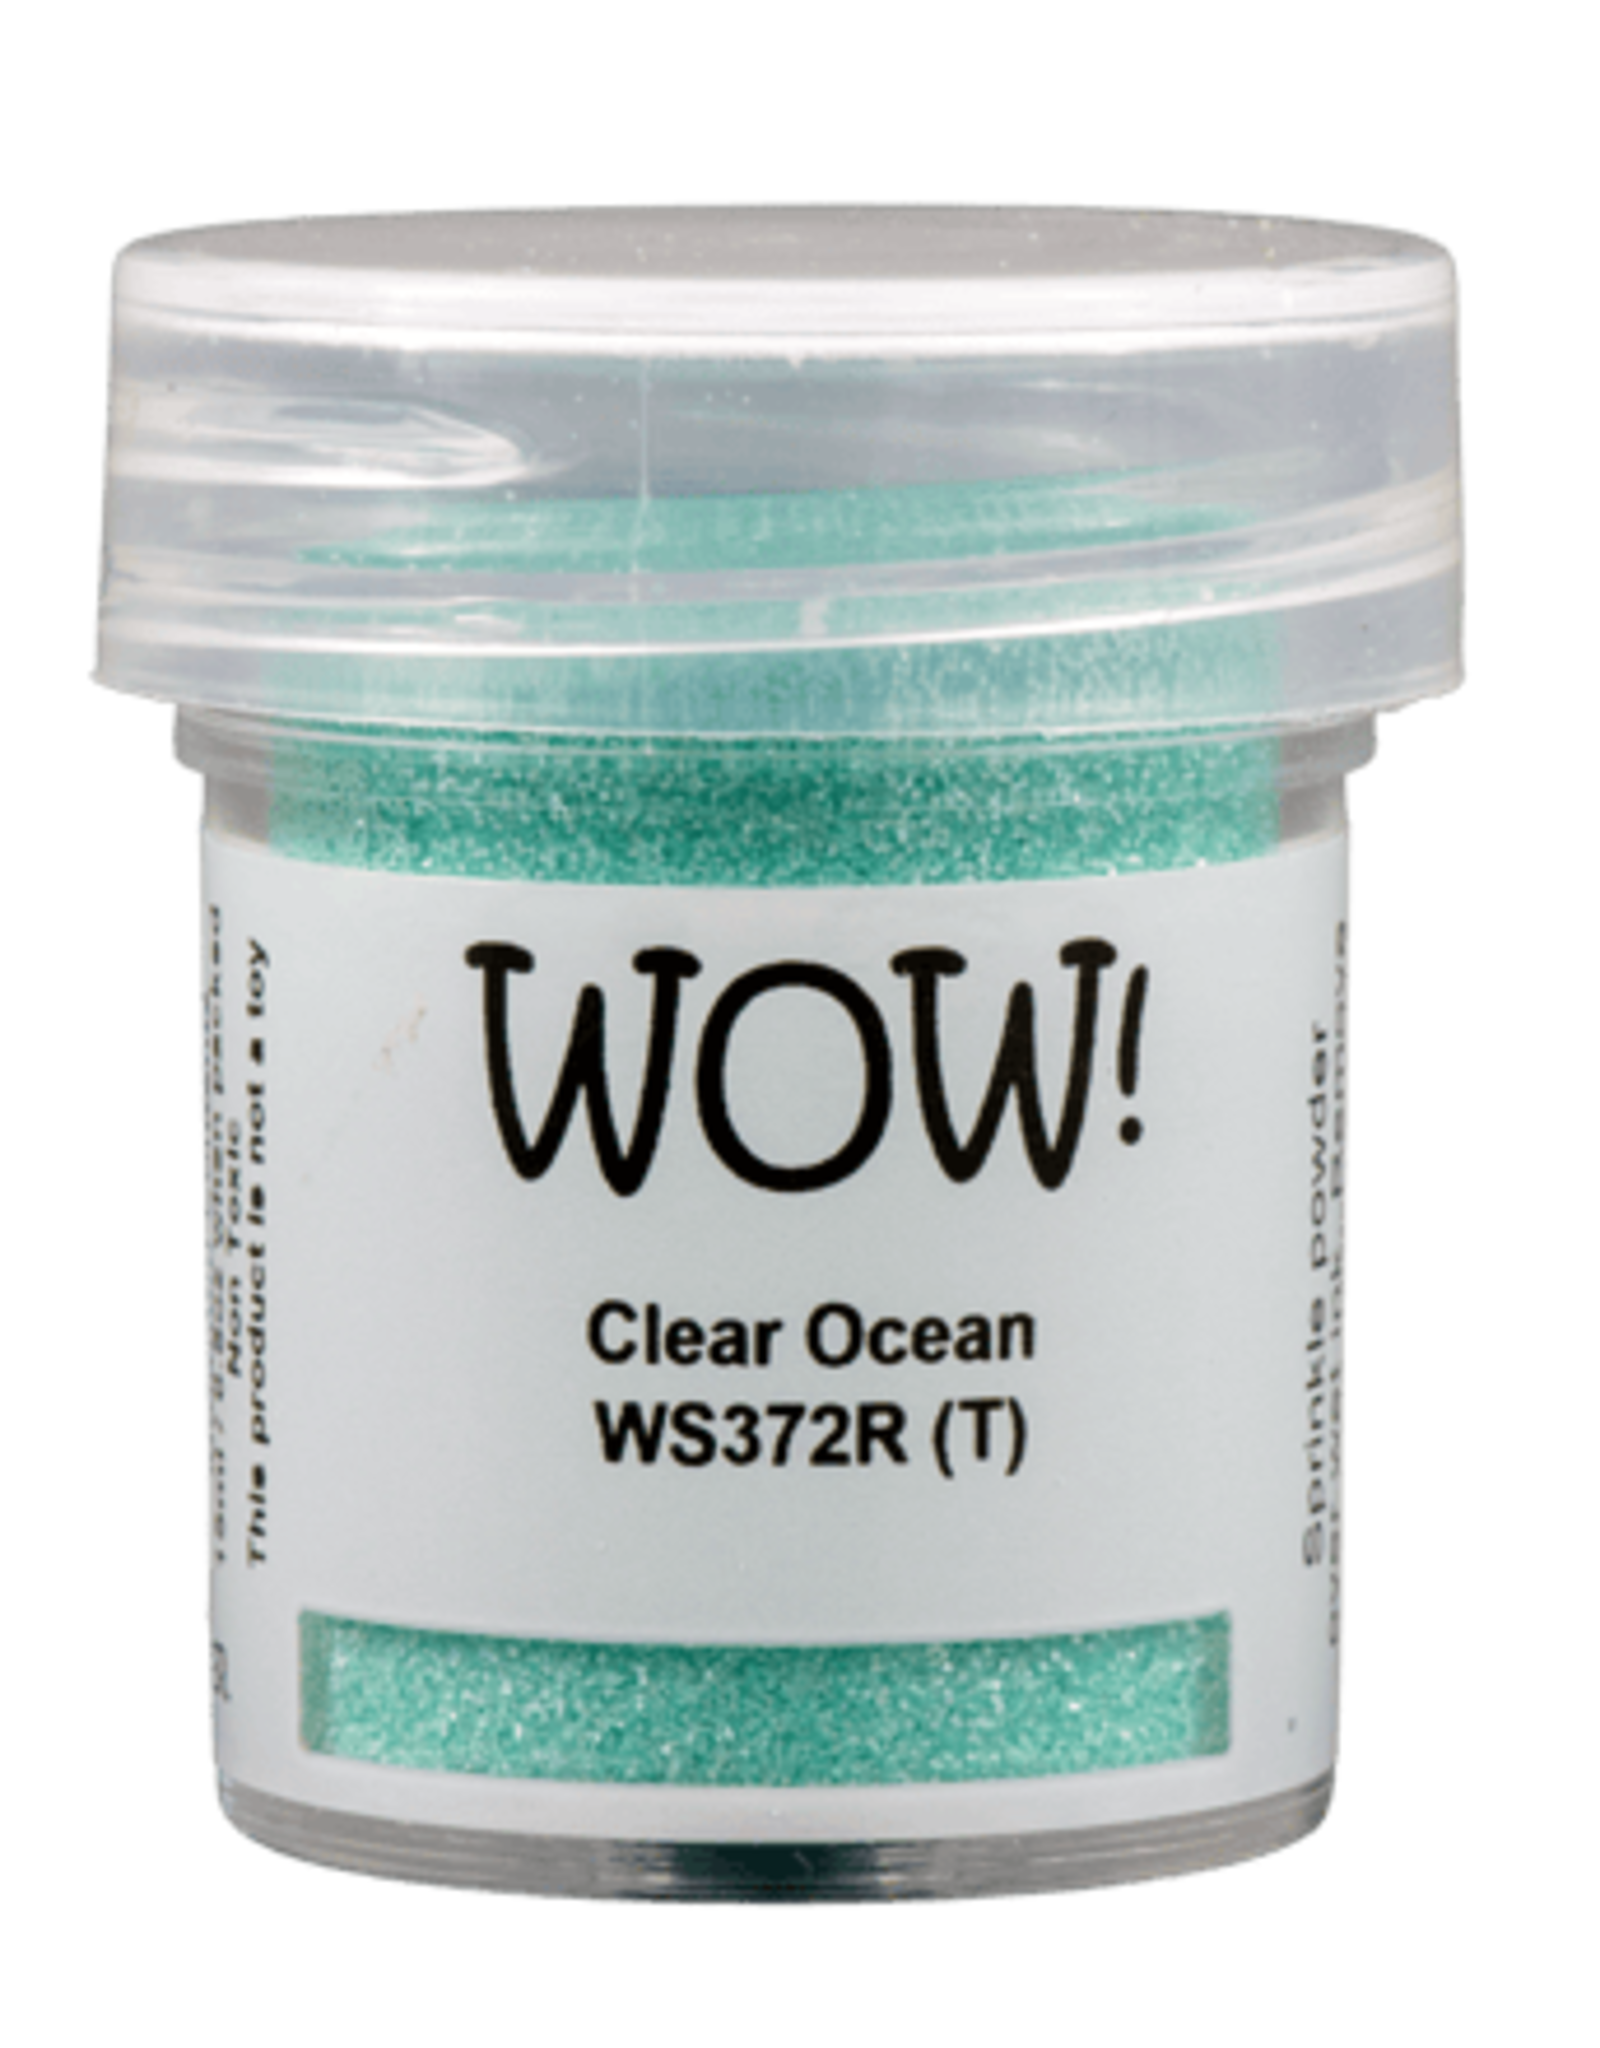 WOW! WOW! CLEAR OCEAN EMBOSSING POWDER 0.5OZ